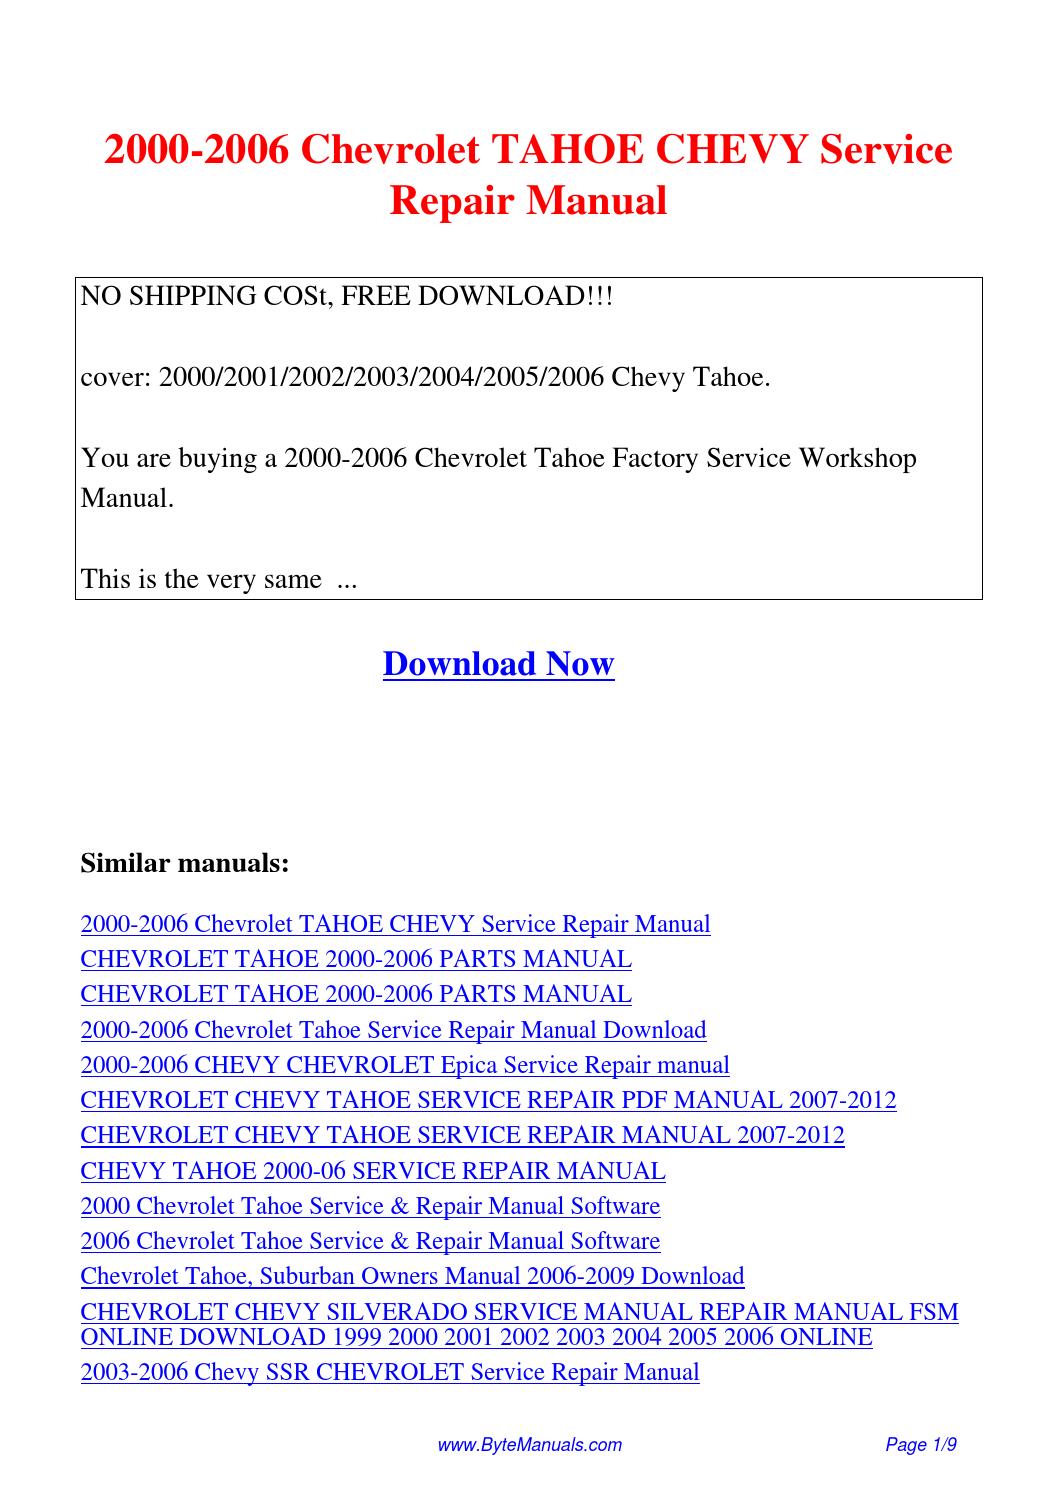 Free 2006 tahoe service manual download